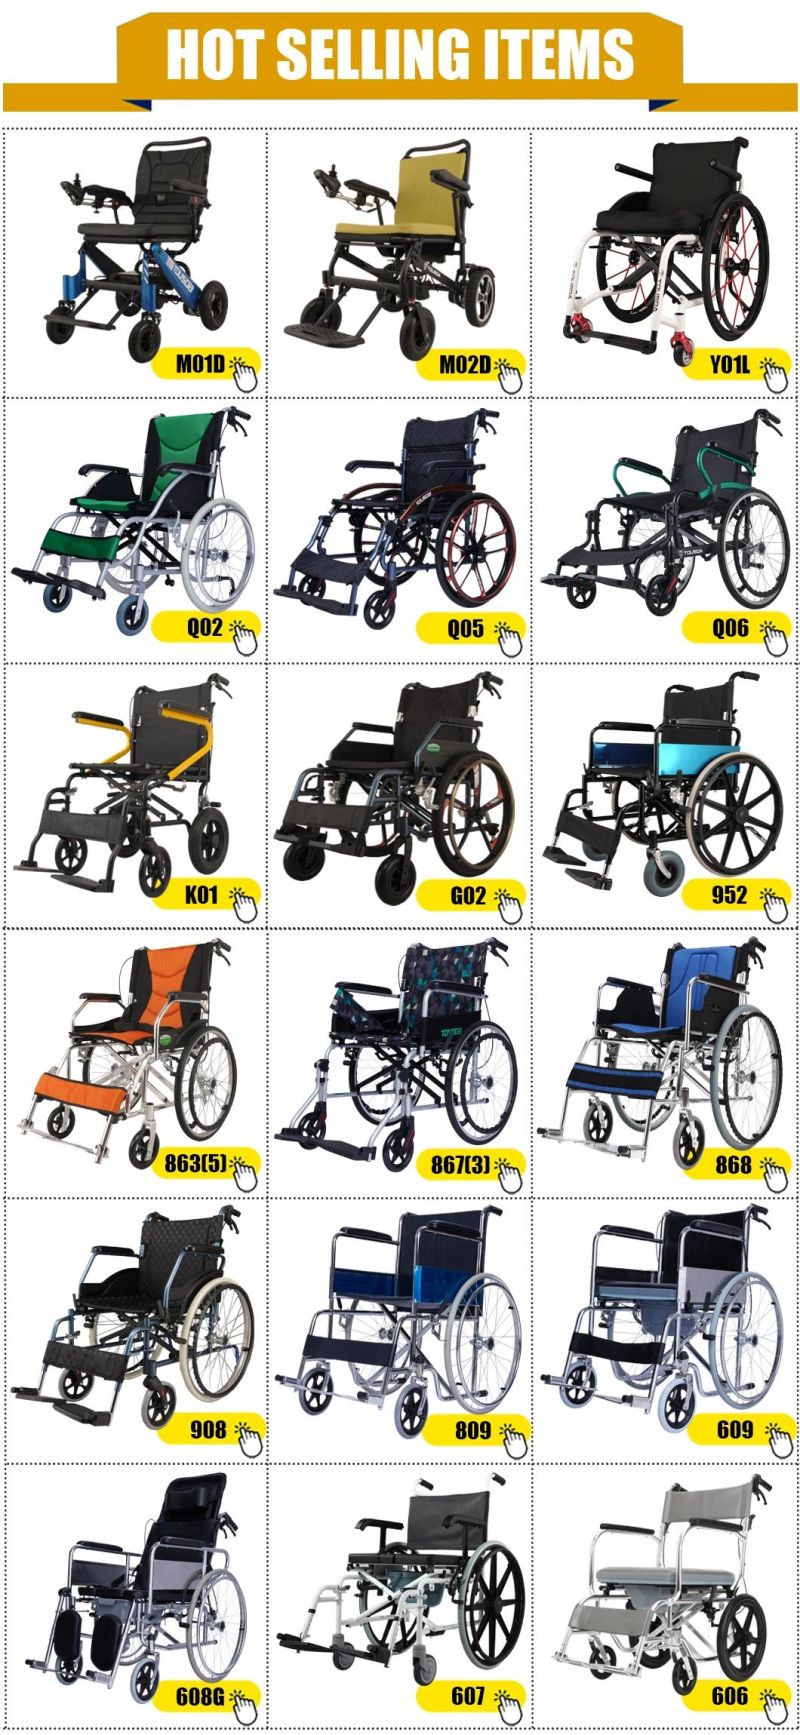 Basketball Forward Sport Aluminum Wheelchair for Disabled